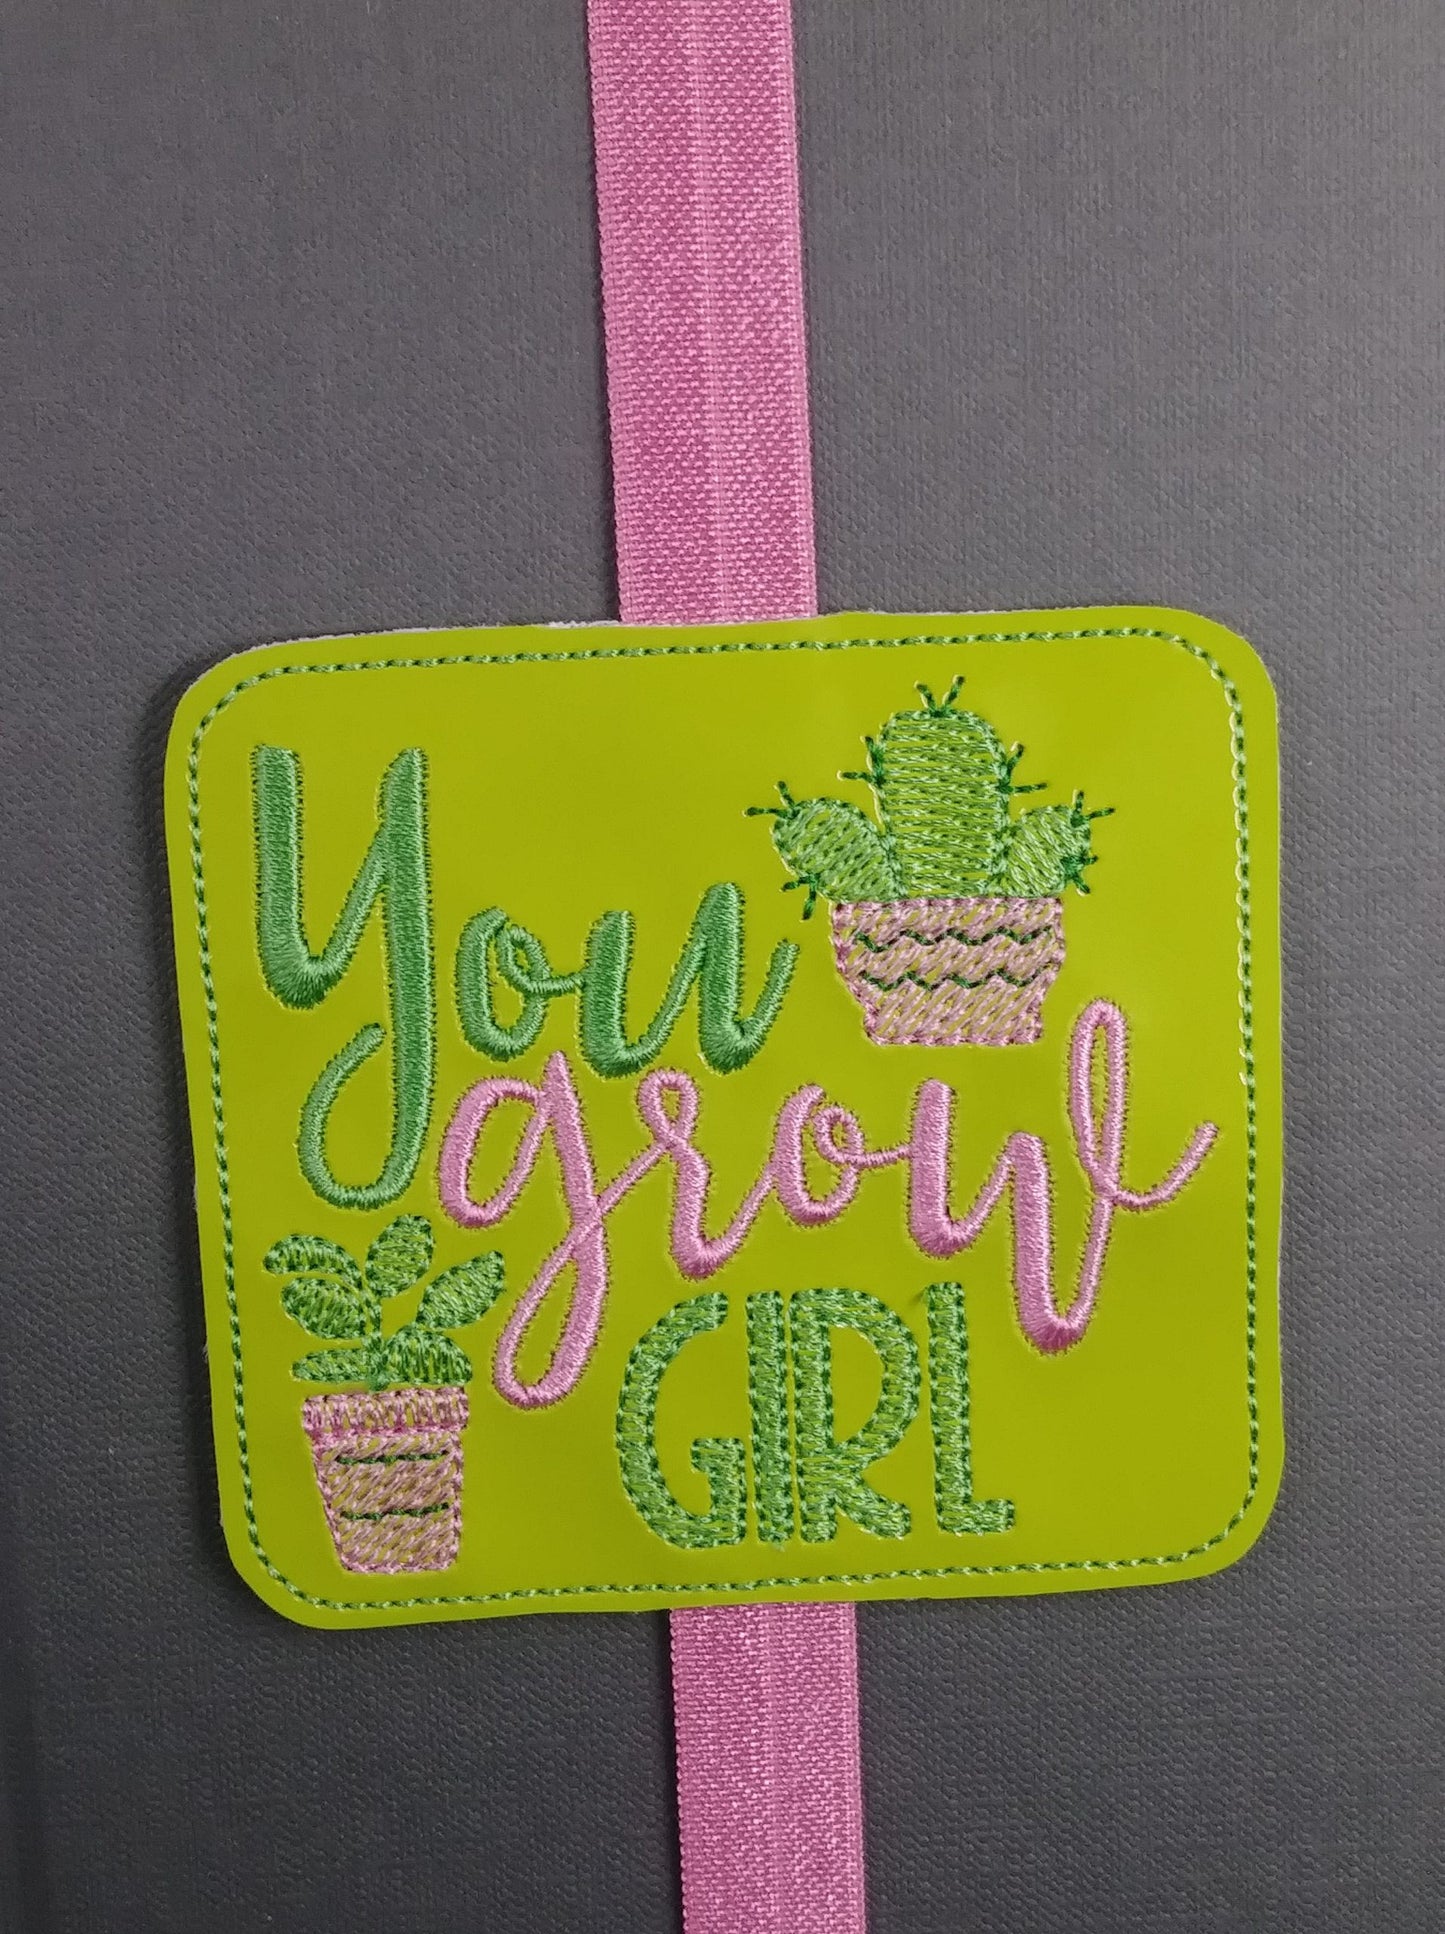 You Grow Girl Book Band - Embroidery Design, Digital File